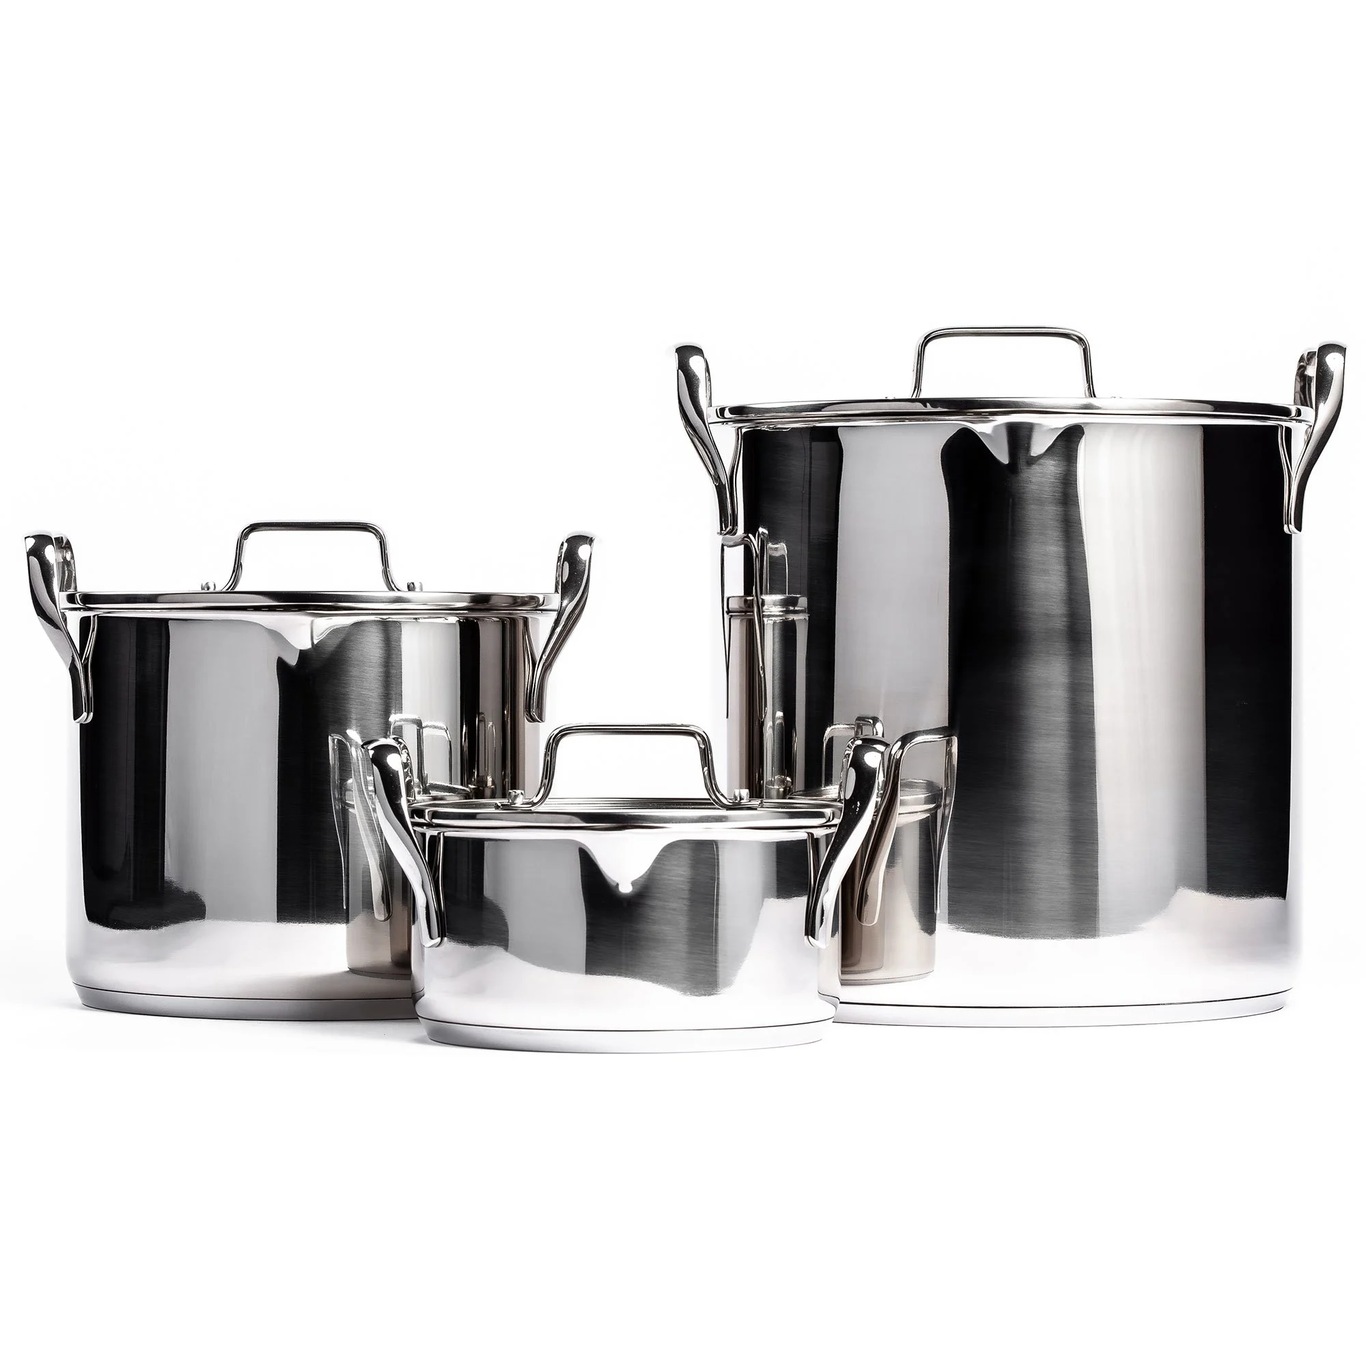 https://royaldesign.com/image/2/mareld-mareld-stackable-pot-set-stainless-steel-1-45-10l-1?w=800&quality=80